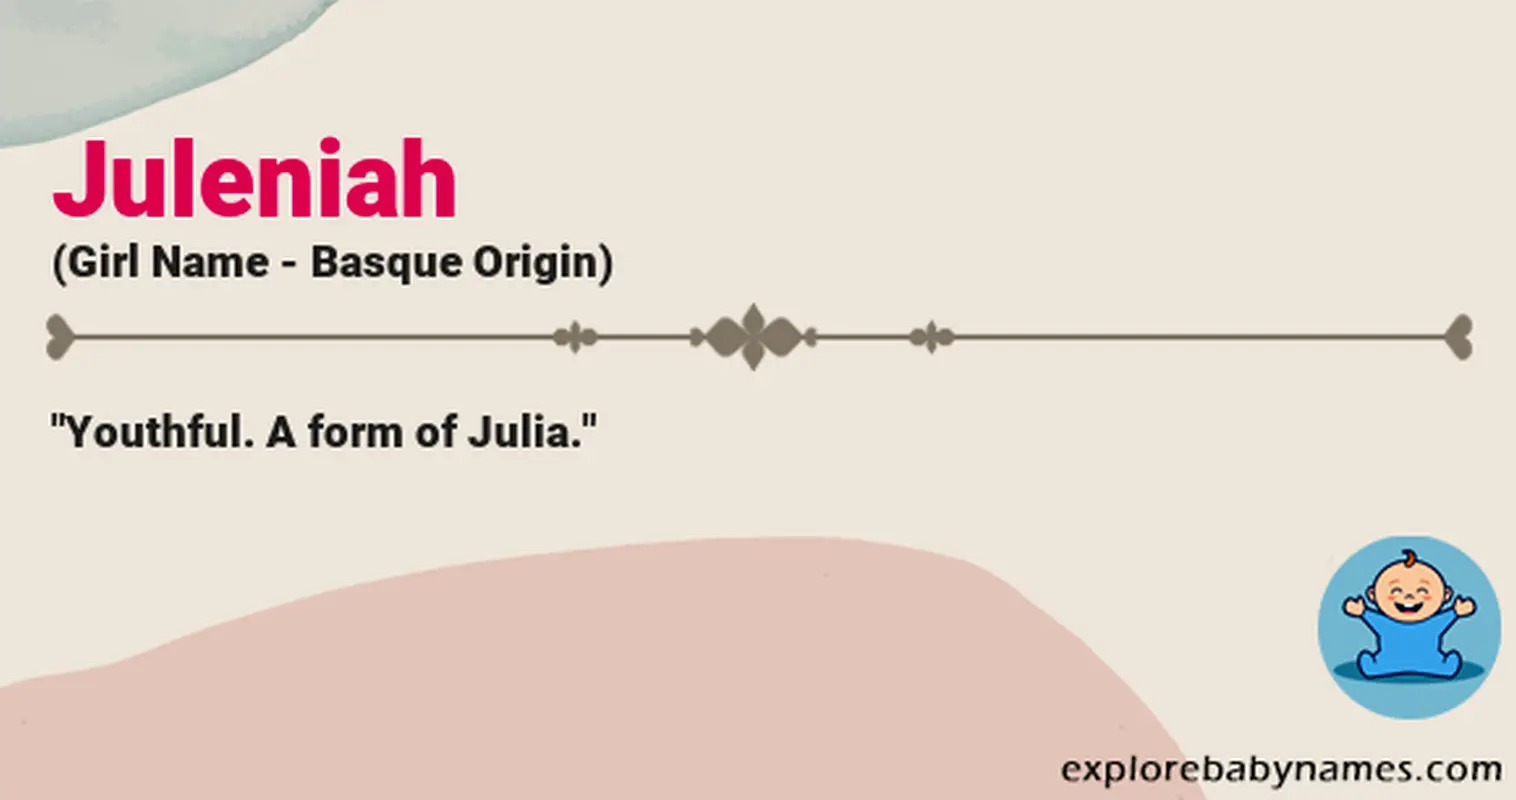 Meaning of Juleniah